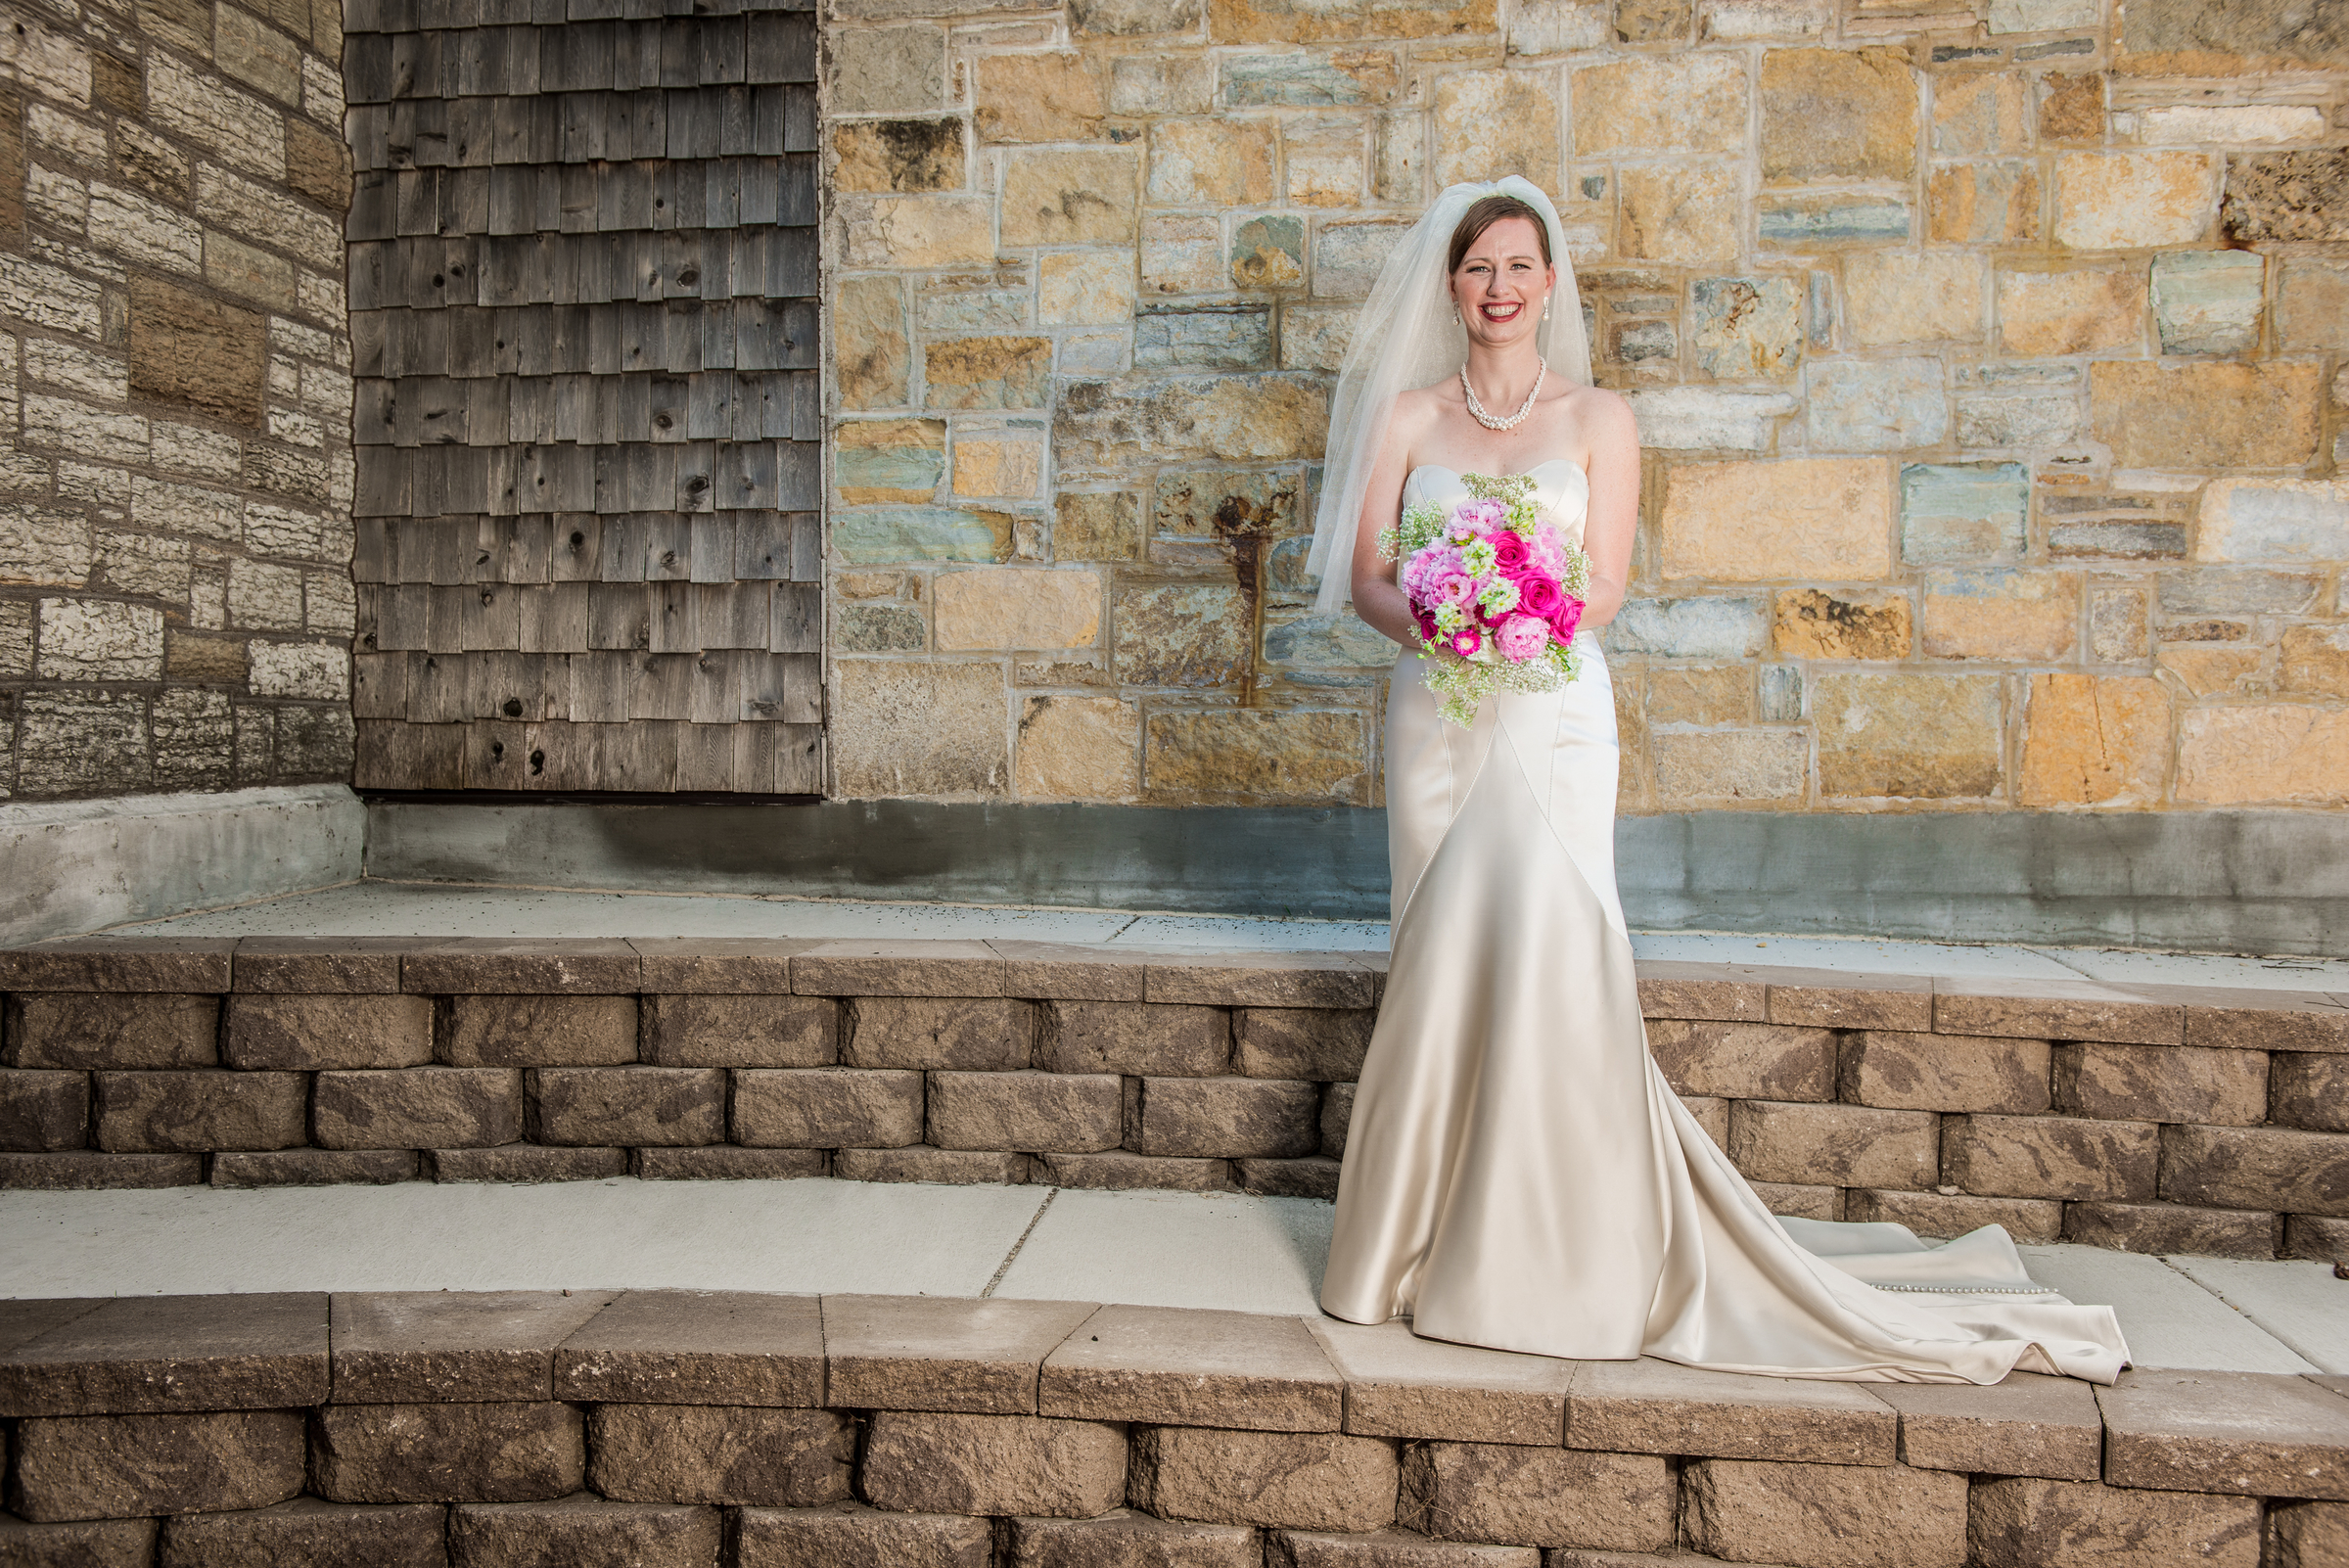 Bride smiles holding flowers at Carpenter Nature Center wedding in Hastings, Minnesota.